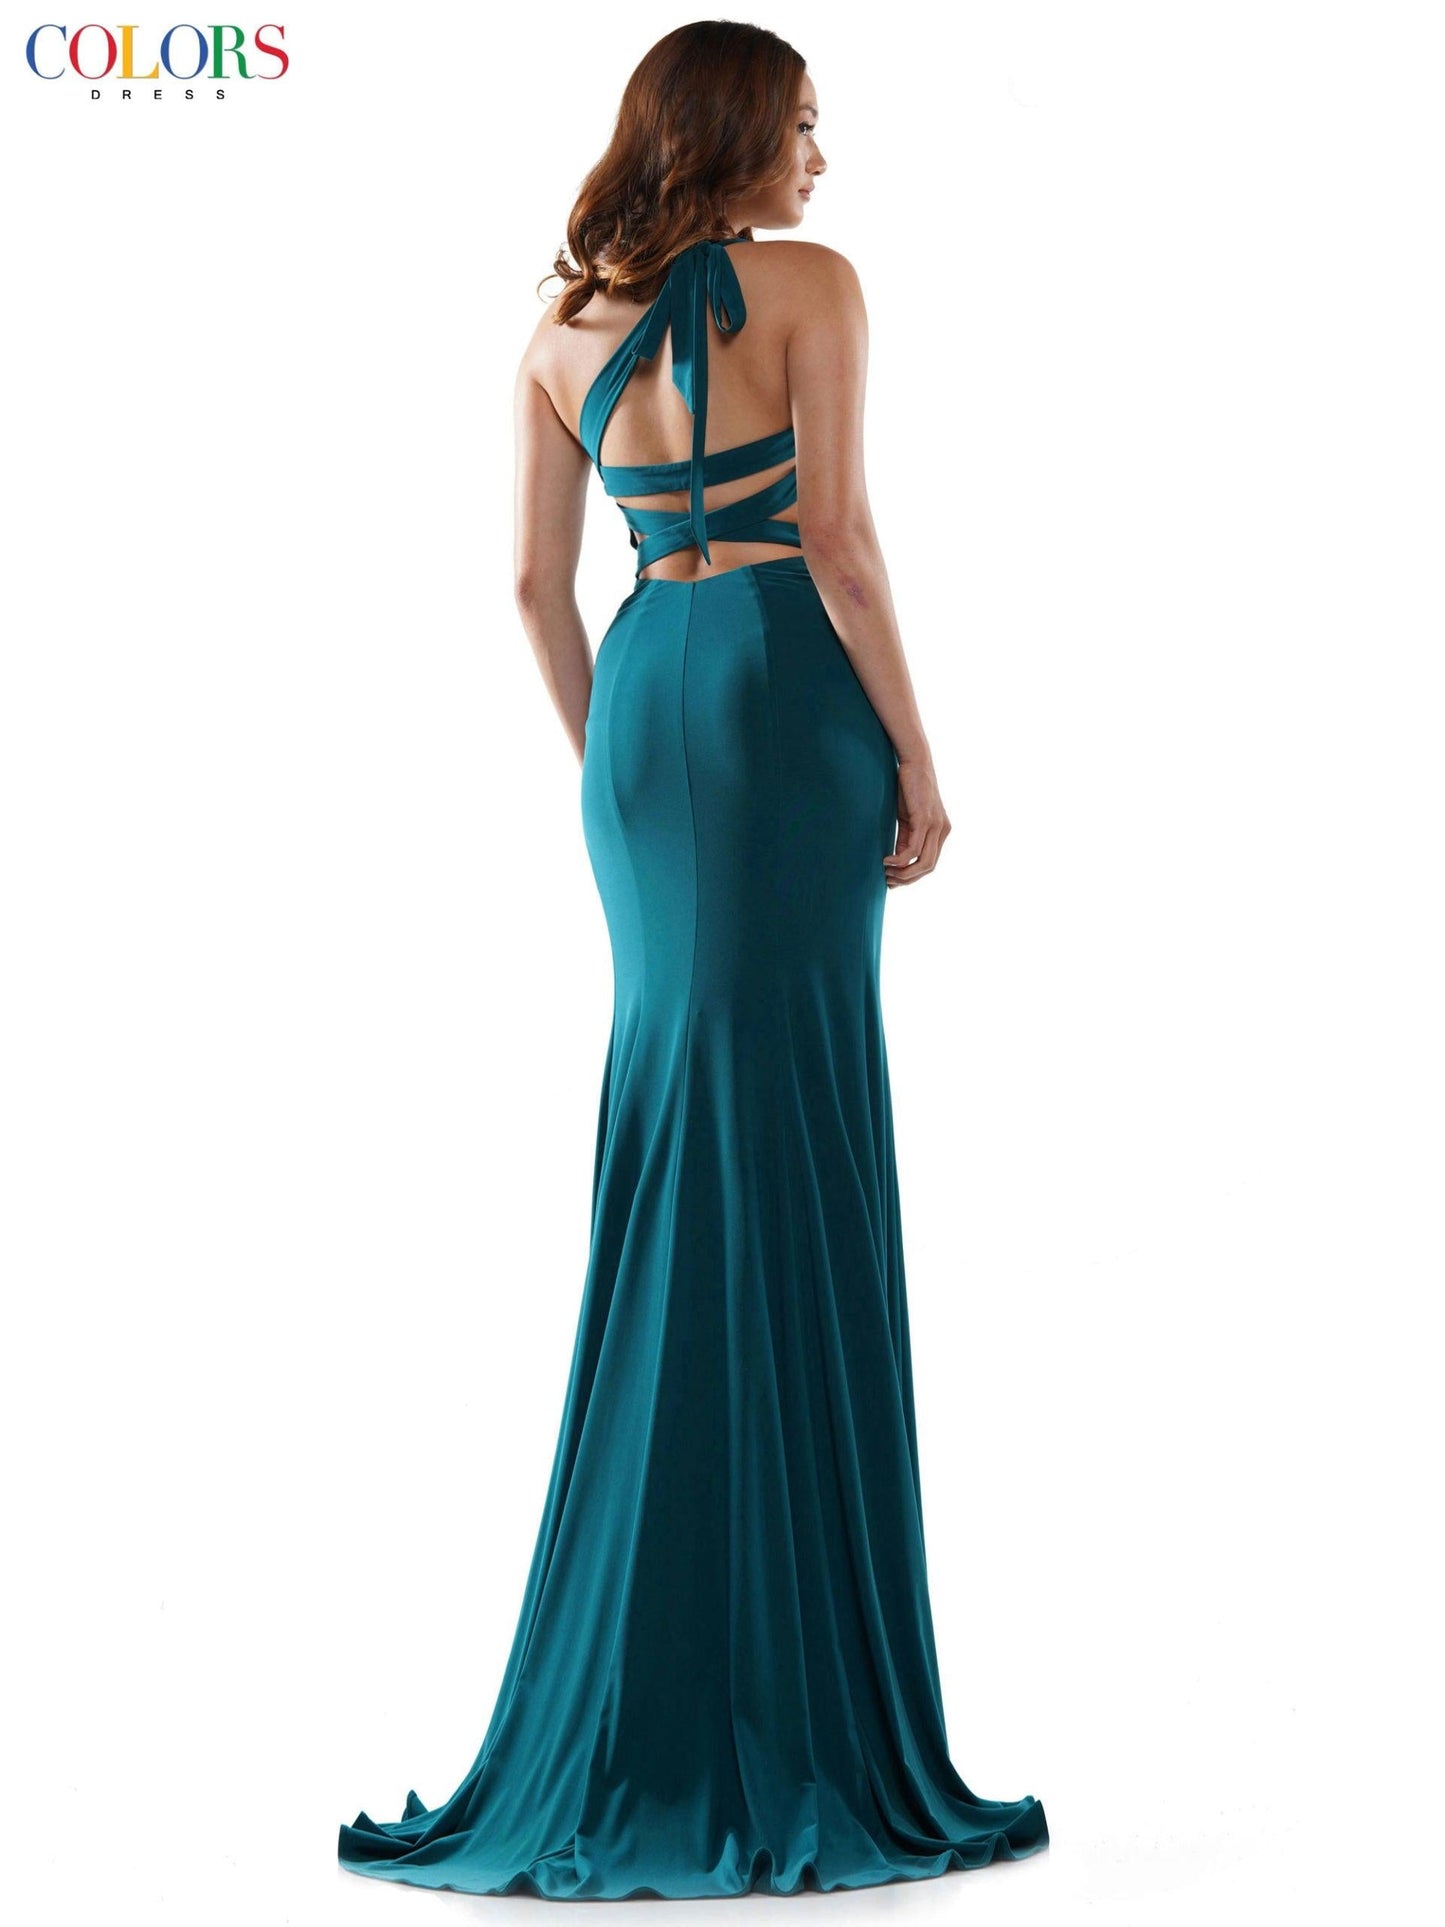 Colors Long Formal One Shoulder Prom Dress 2626 - The Dress Outlet